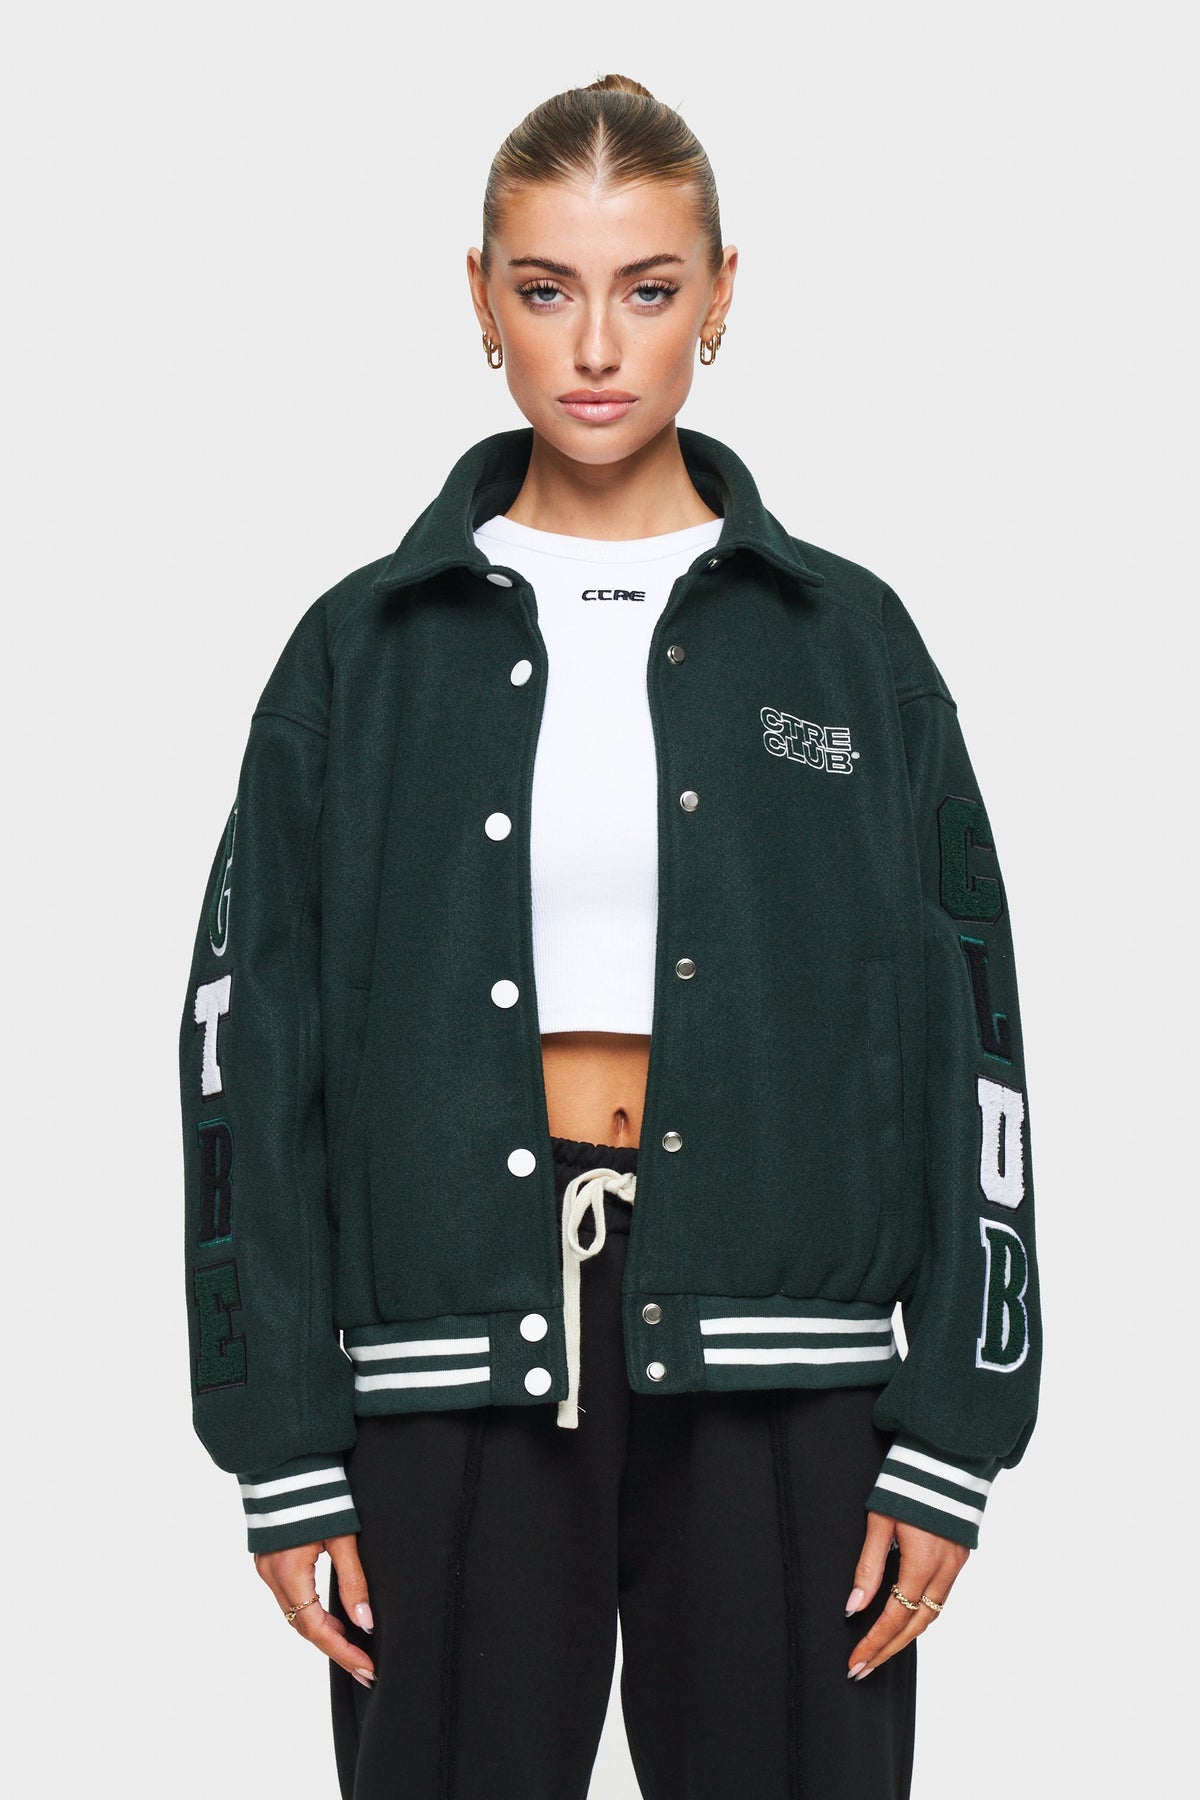 TCC Men's Green Varsity Jacket | The Couture Club - Xs